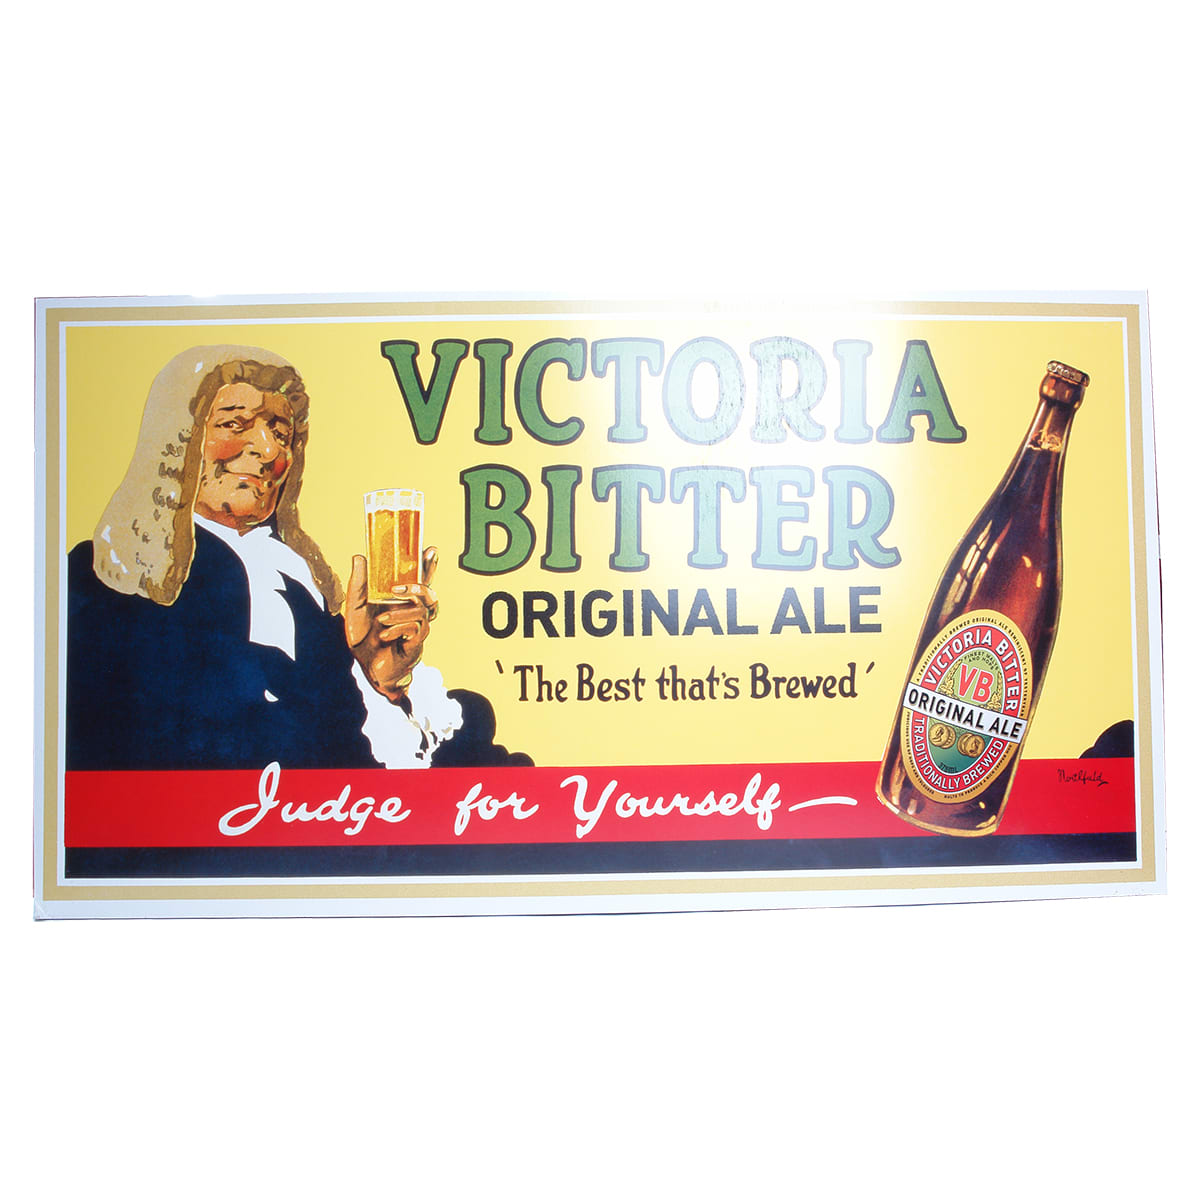 Poster. Victoria Bitter, Original Ale, Judge for Yourself.